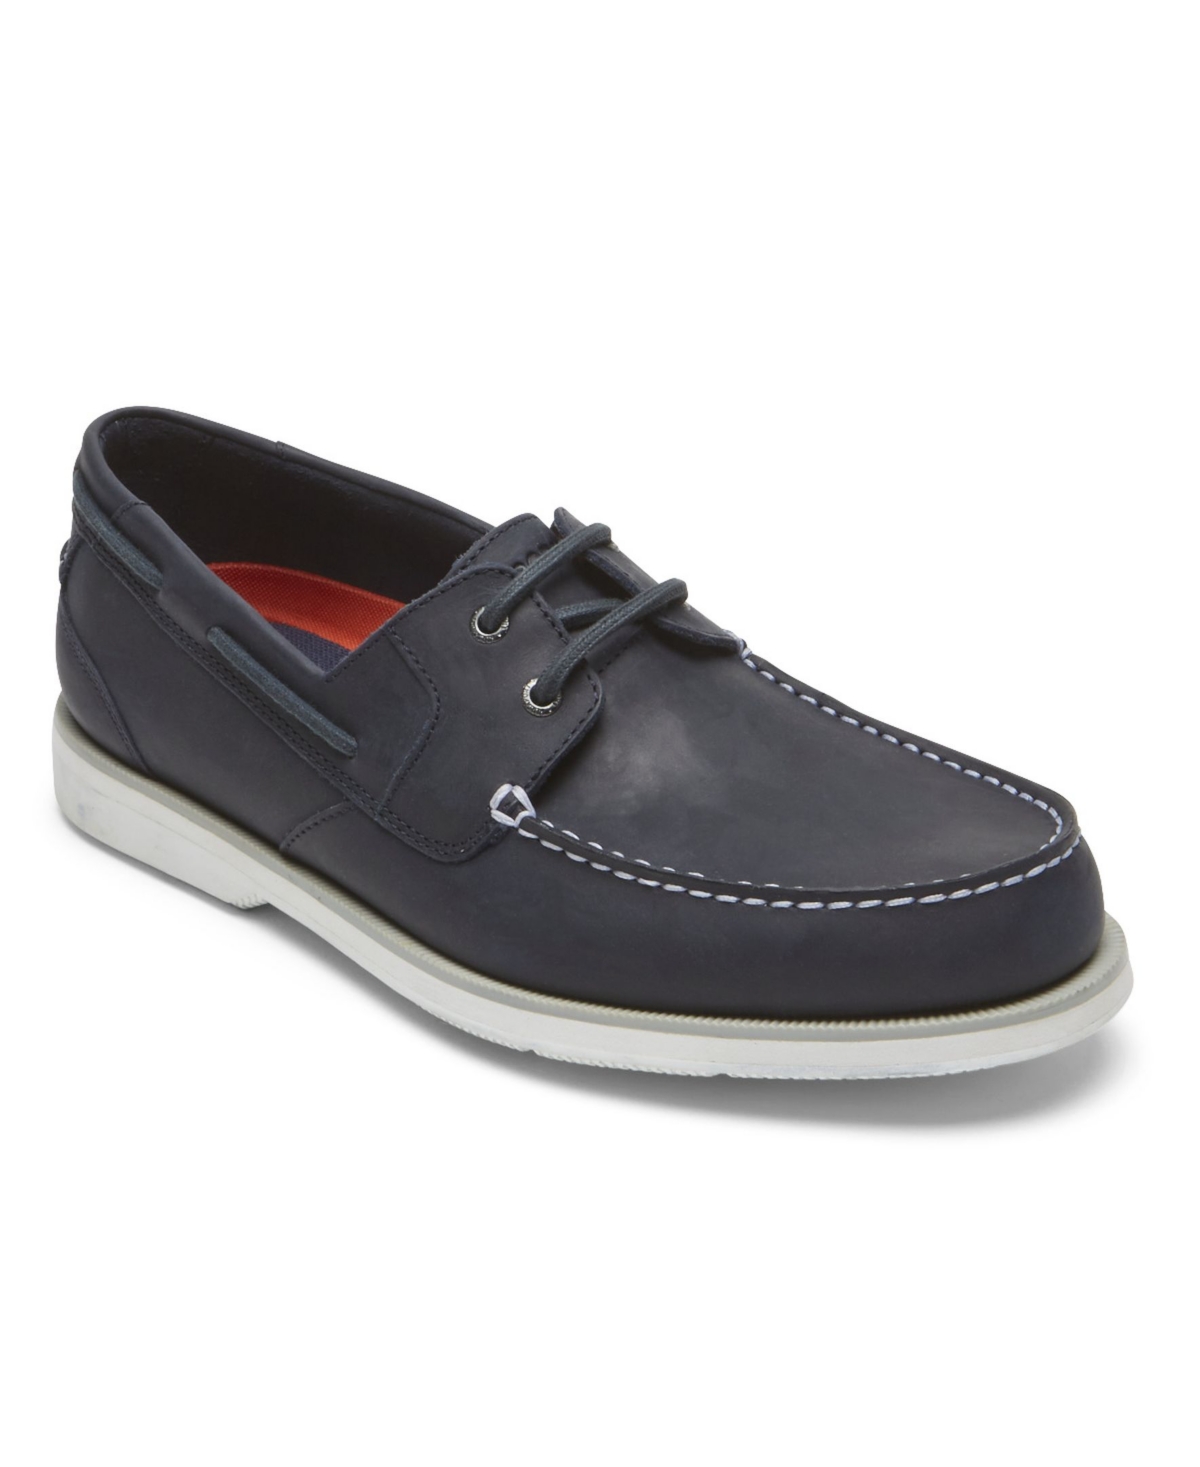 Men's Southport Boat Shoes - Oat